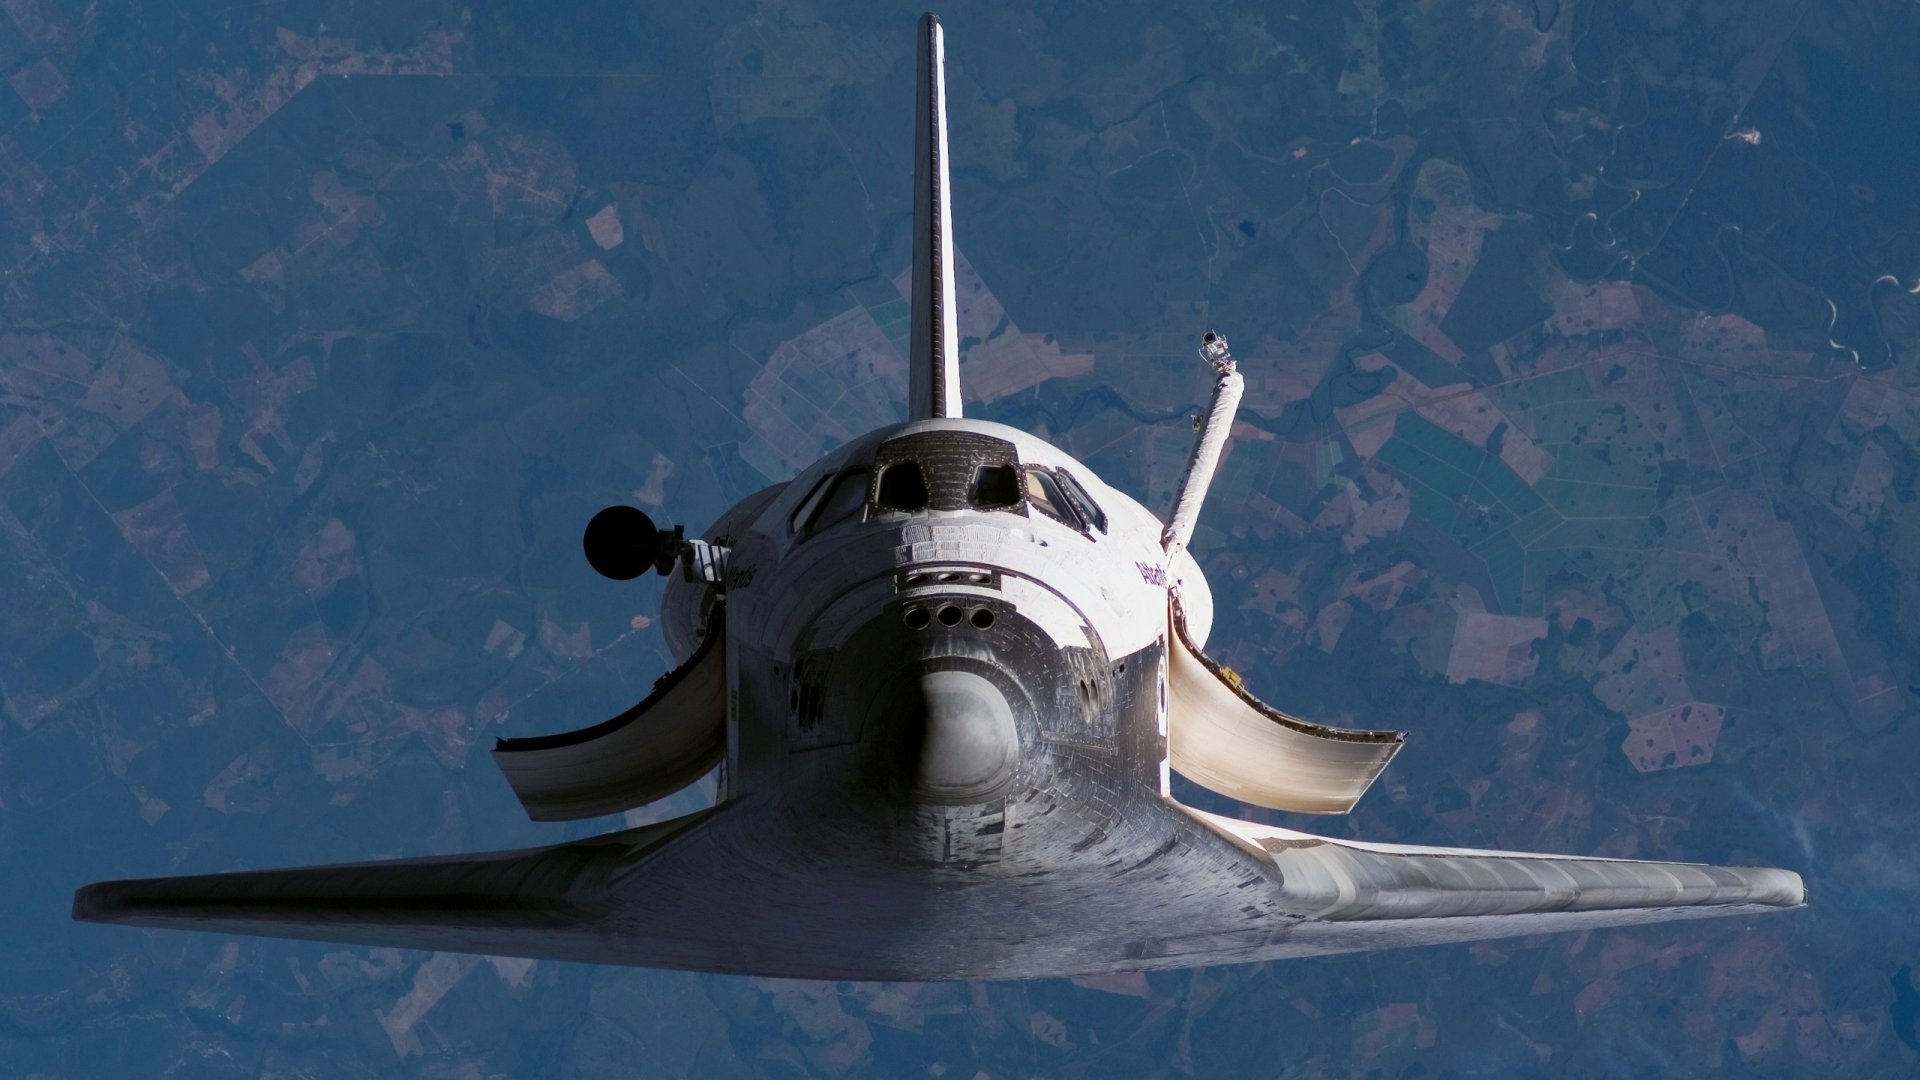 Best Space Shuttle Atlantis background ID:460481 for High Resolution hd 1080p desktop